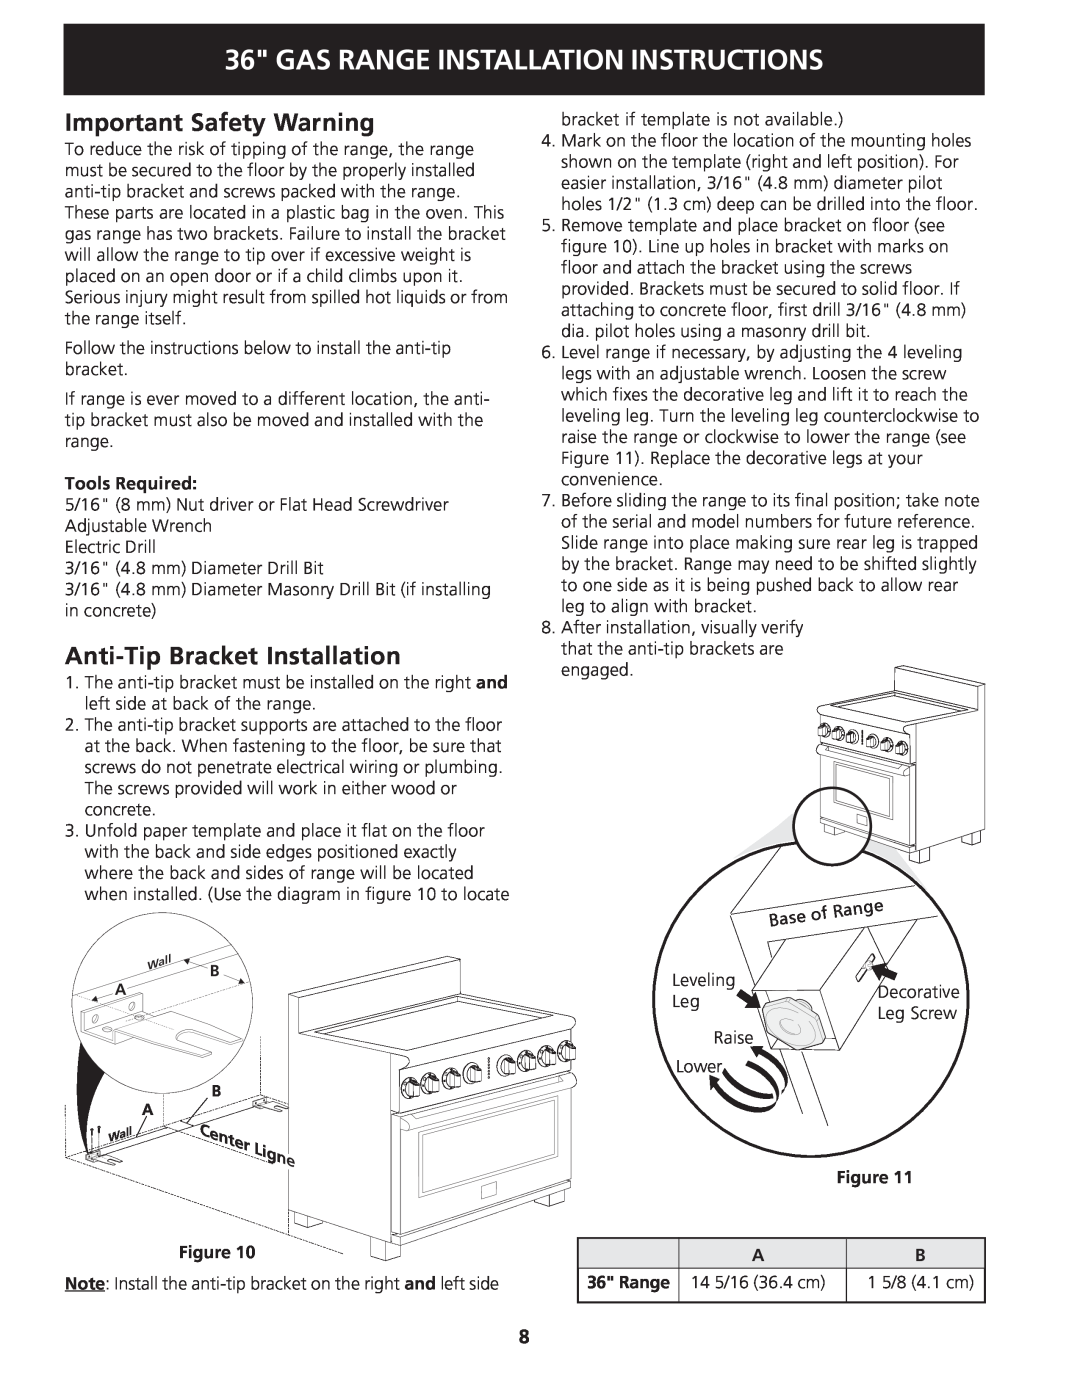 Electrolux 318201778 Important Safety Warning, Anti-TipBracket Installation, Gas Range Installation Instructions 